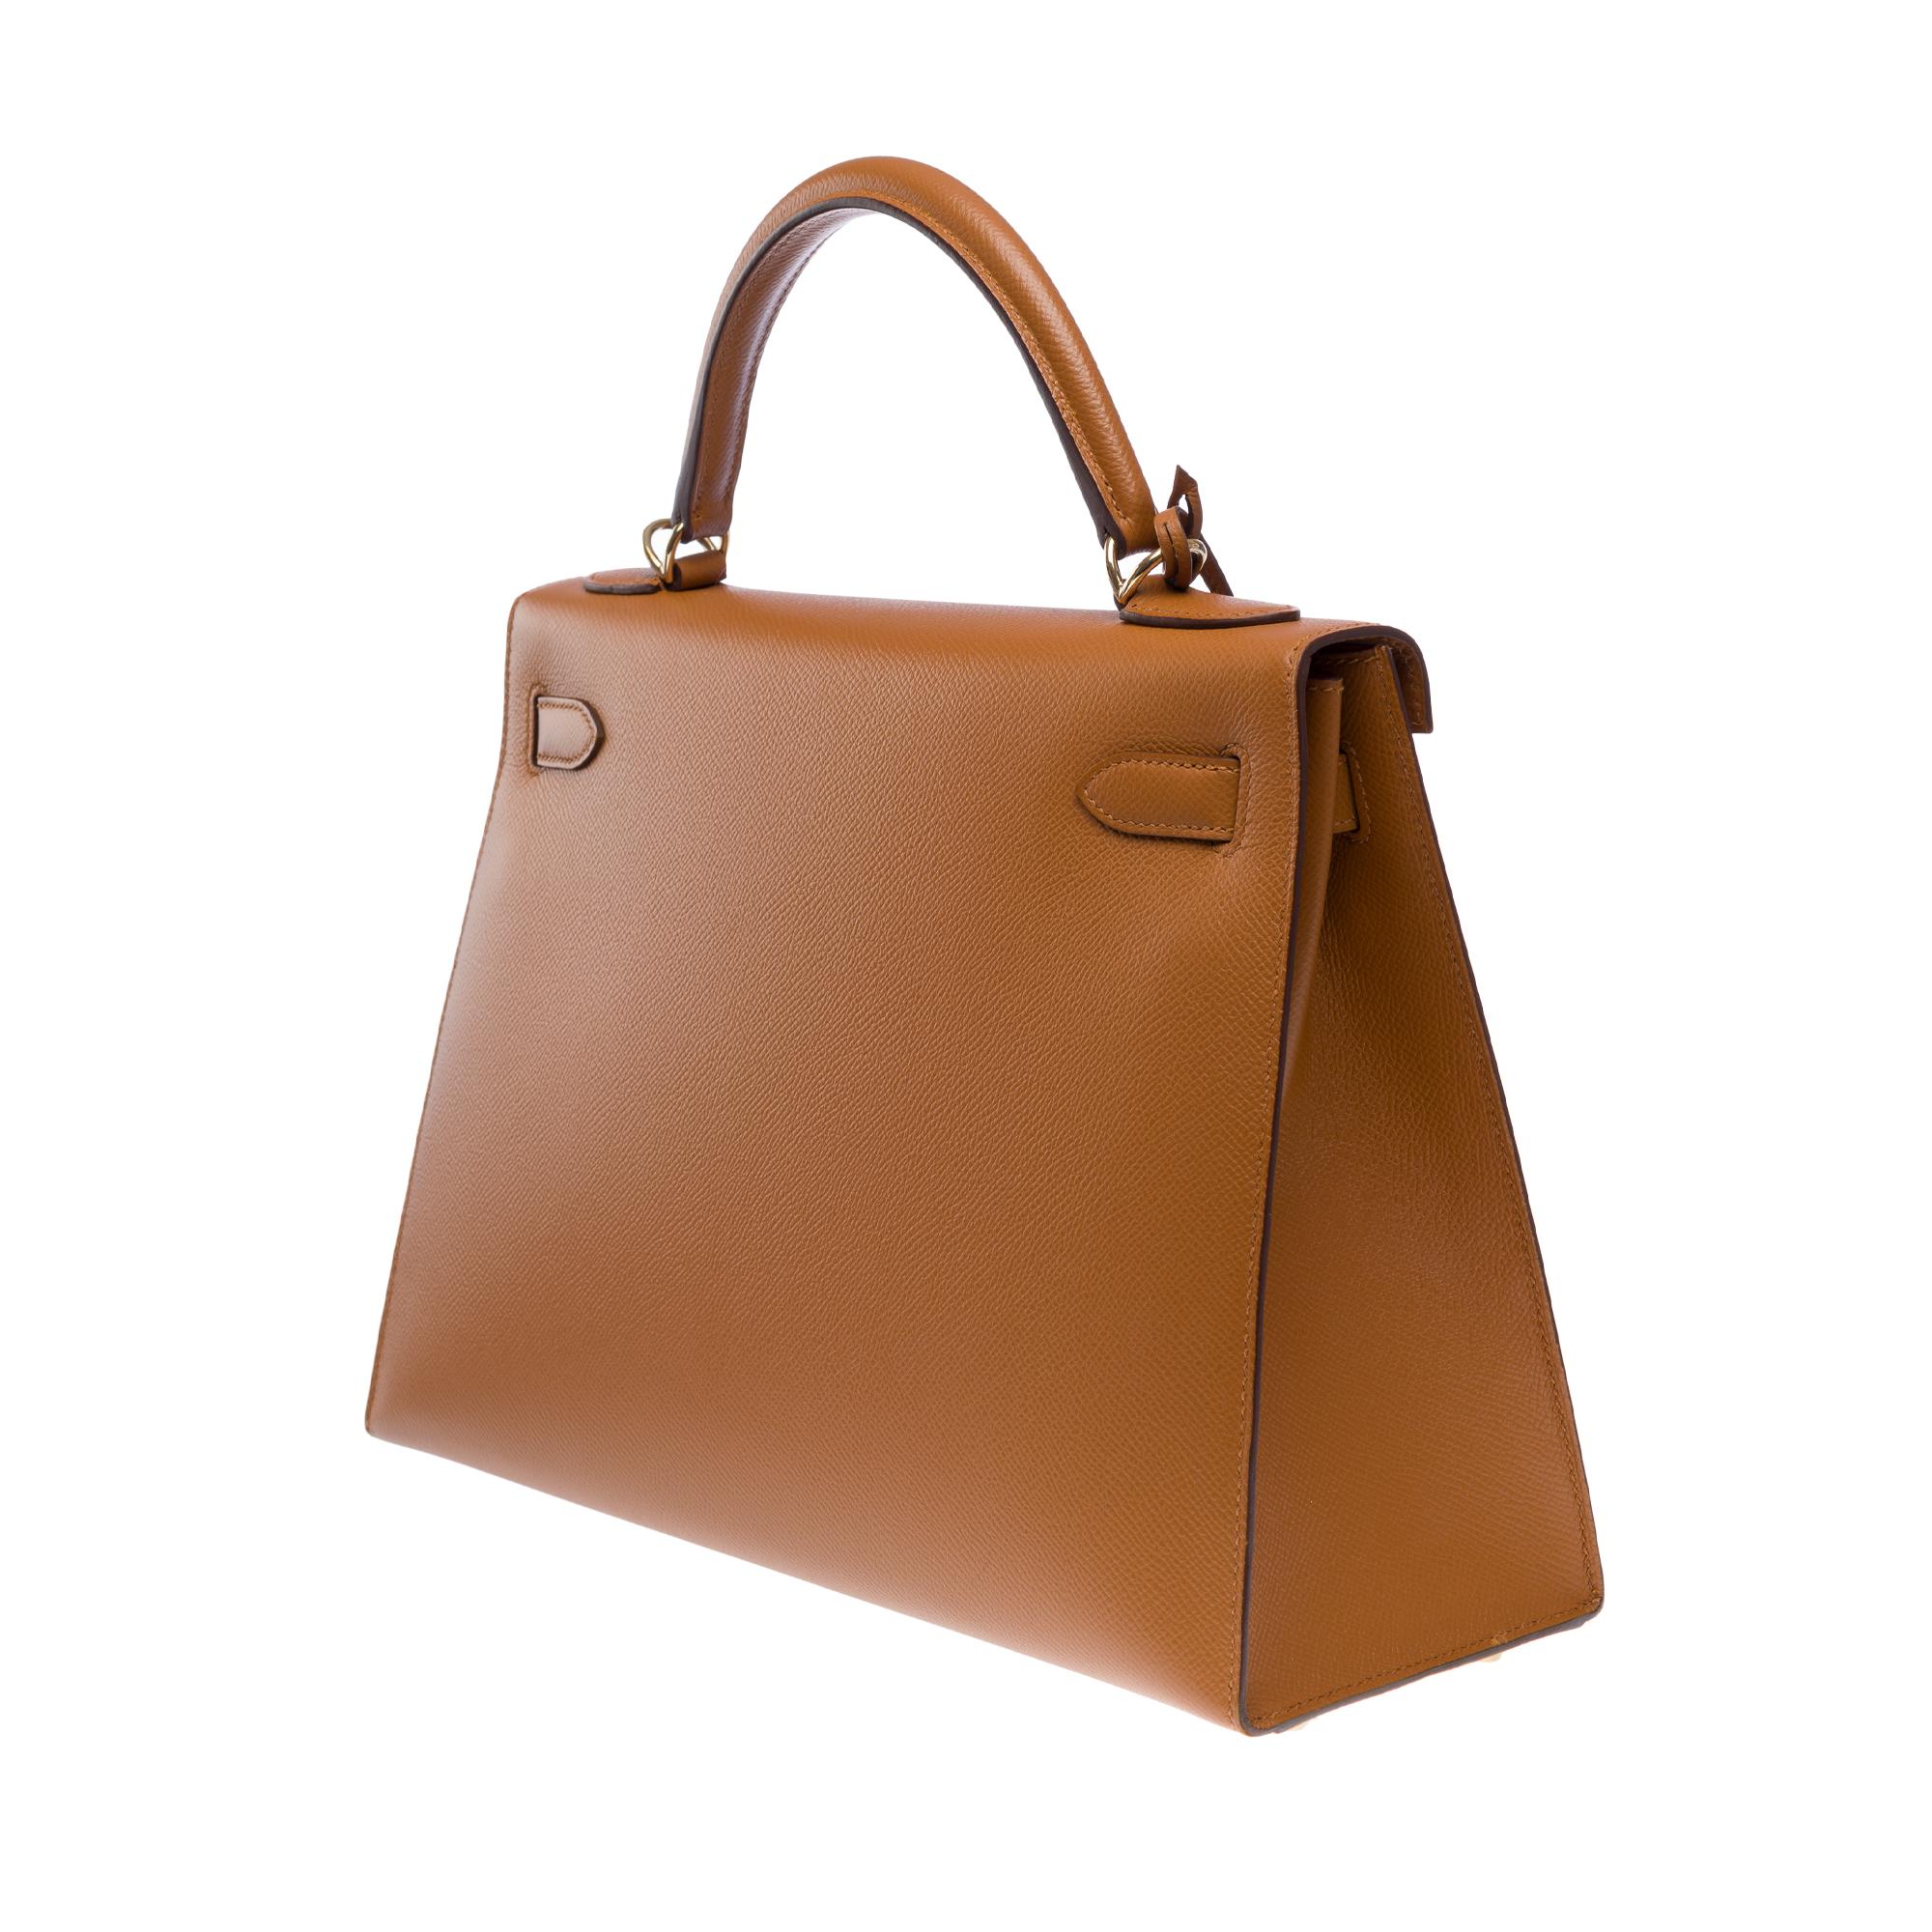 Hermès Kelly 32 sellier handbag strap (HSO) in Camel & Orange Epsom leather, GHW For Sale 2